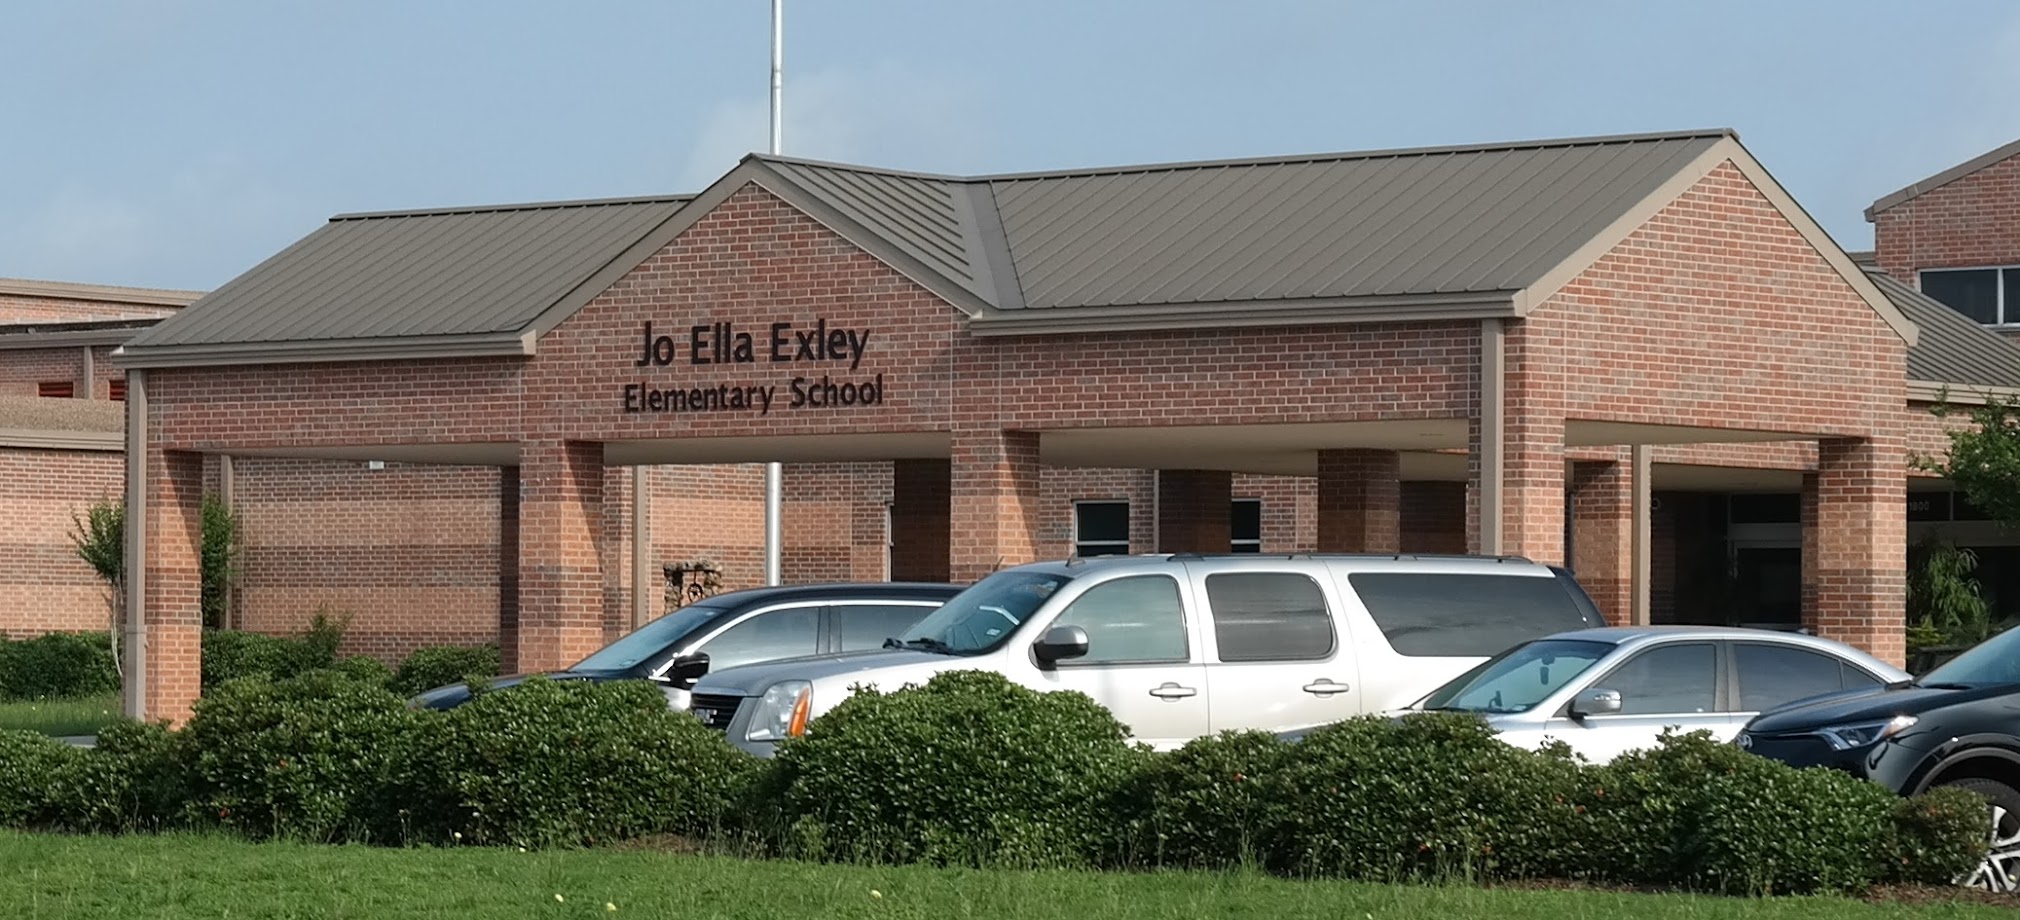 Jo Ella Exley Elementary School